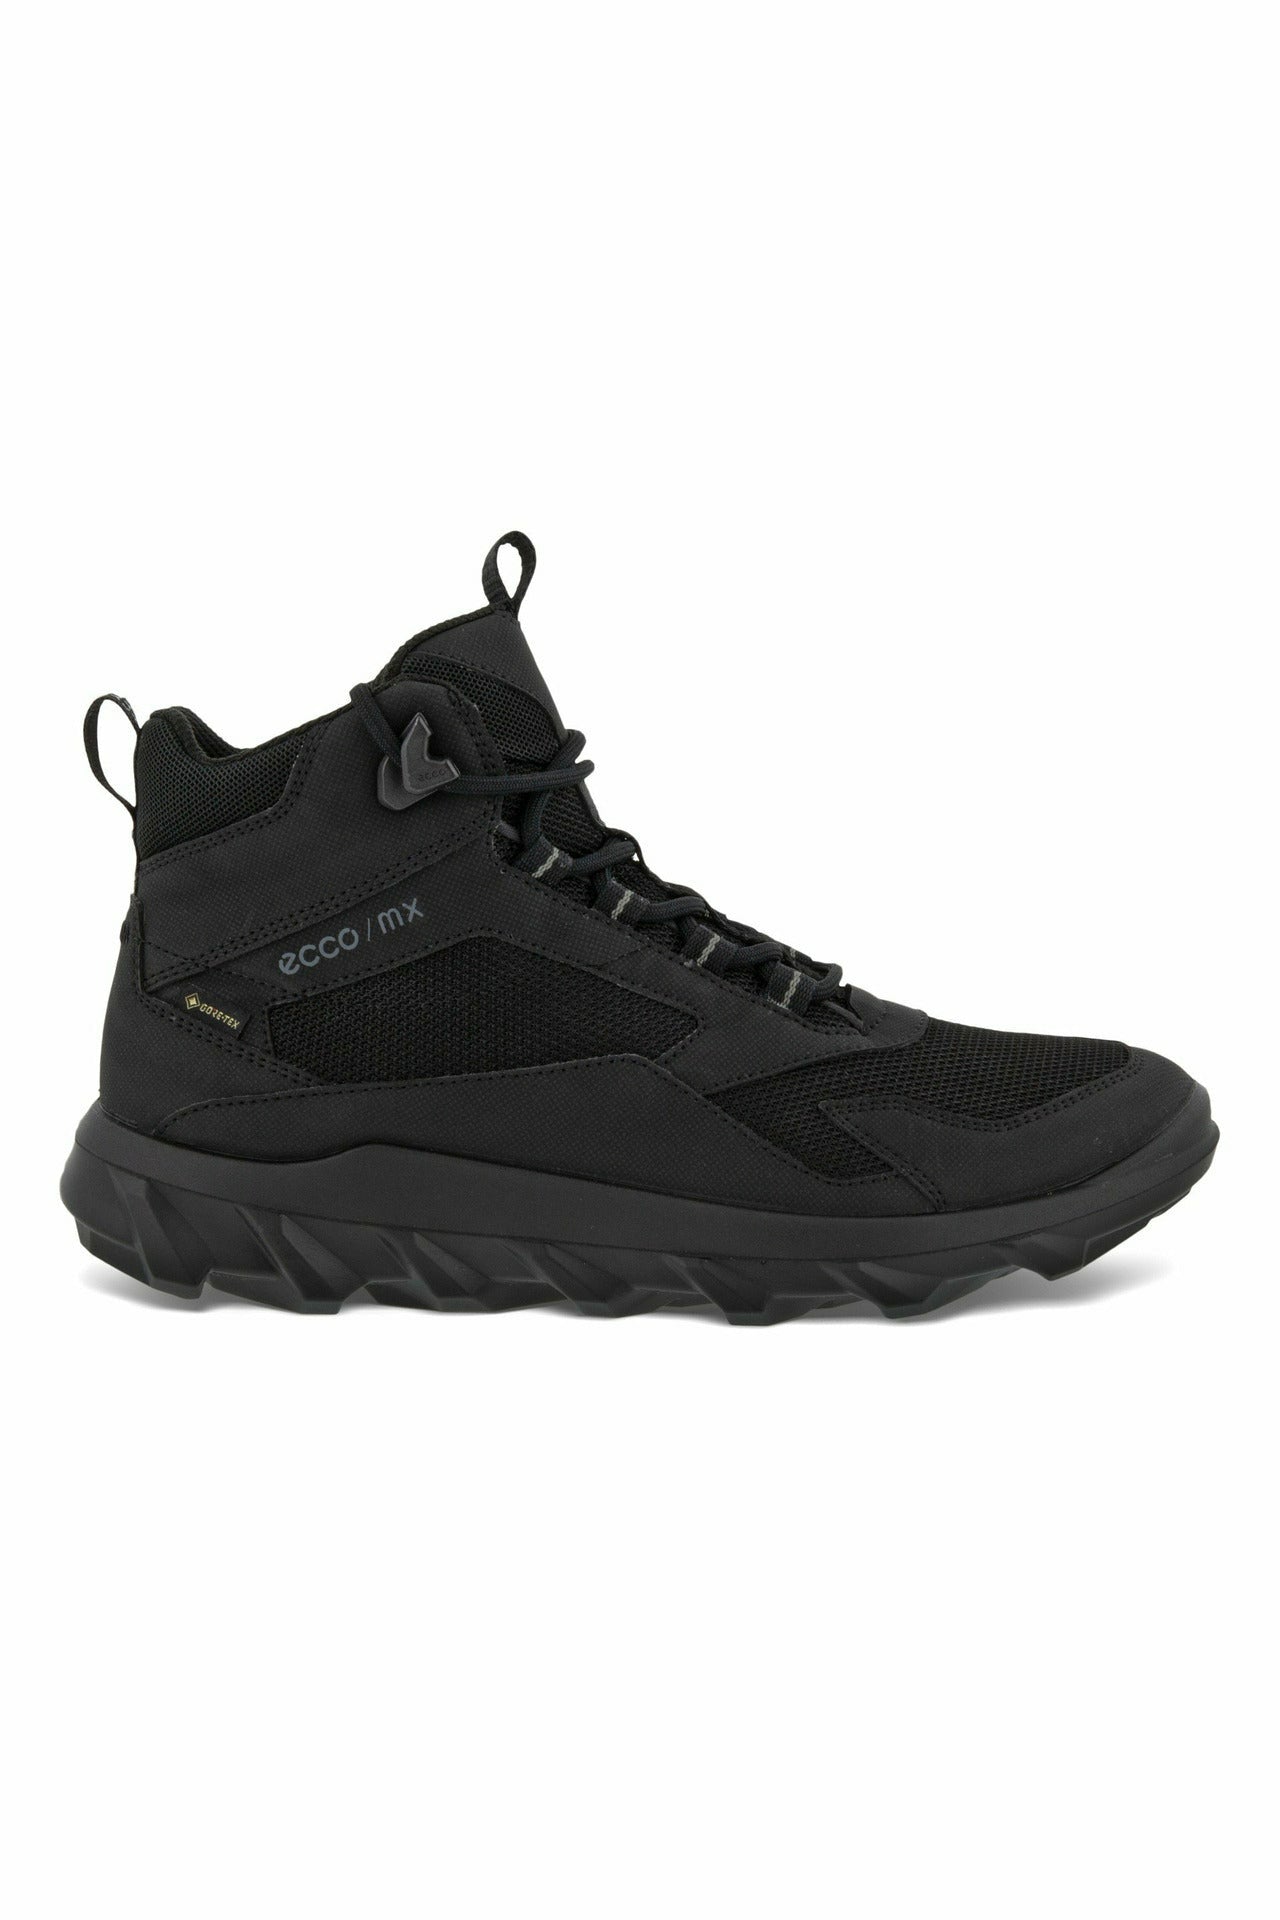 Ecco Mx Ladies walking boot 820223-51052 in black